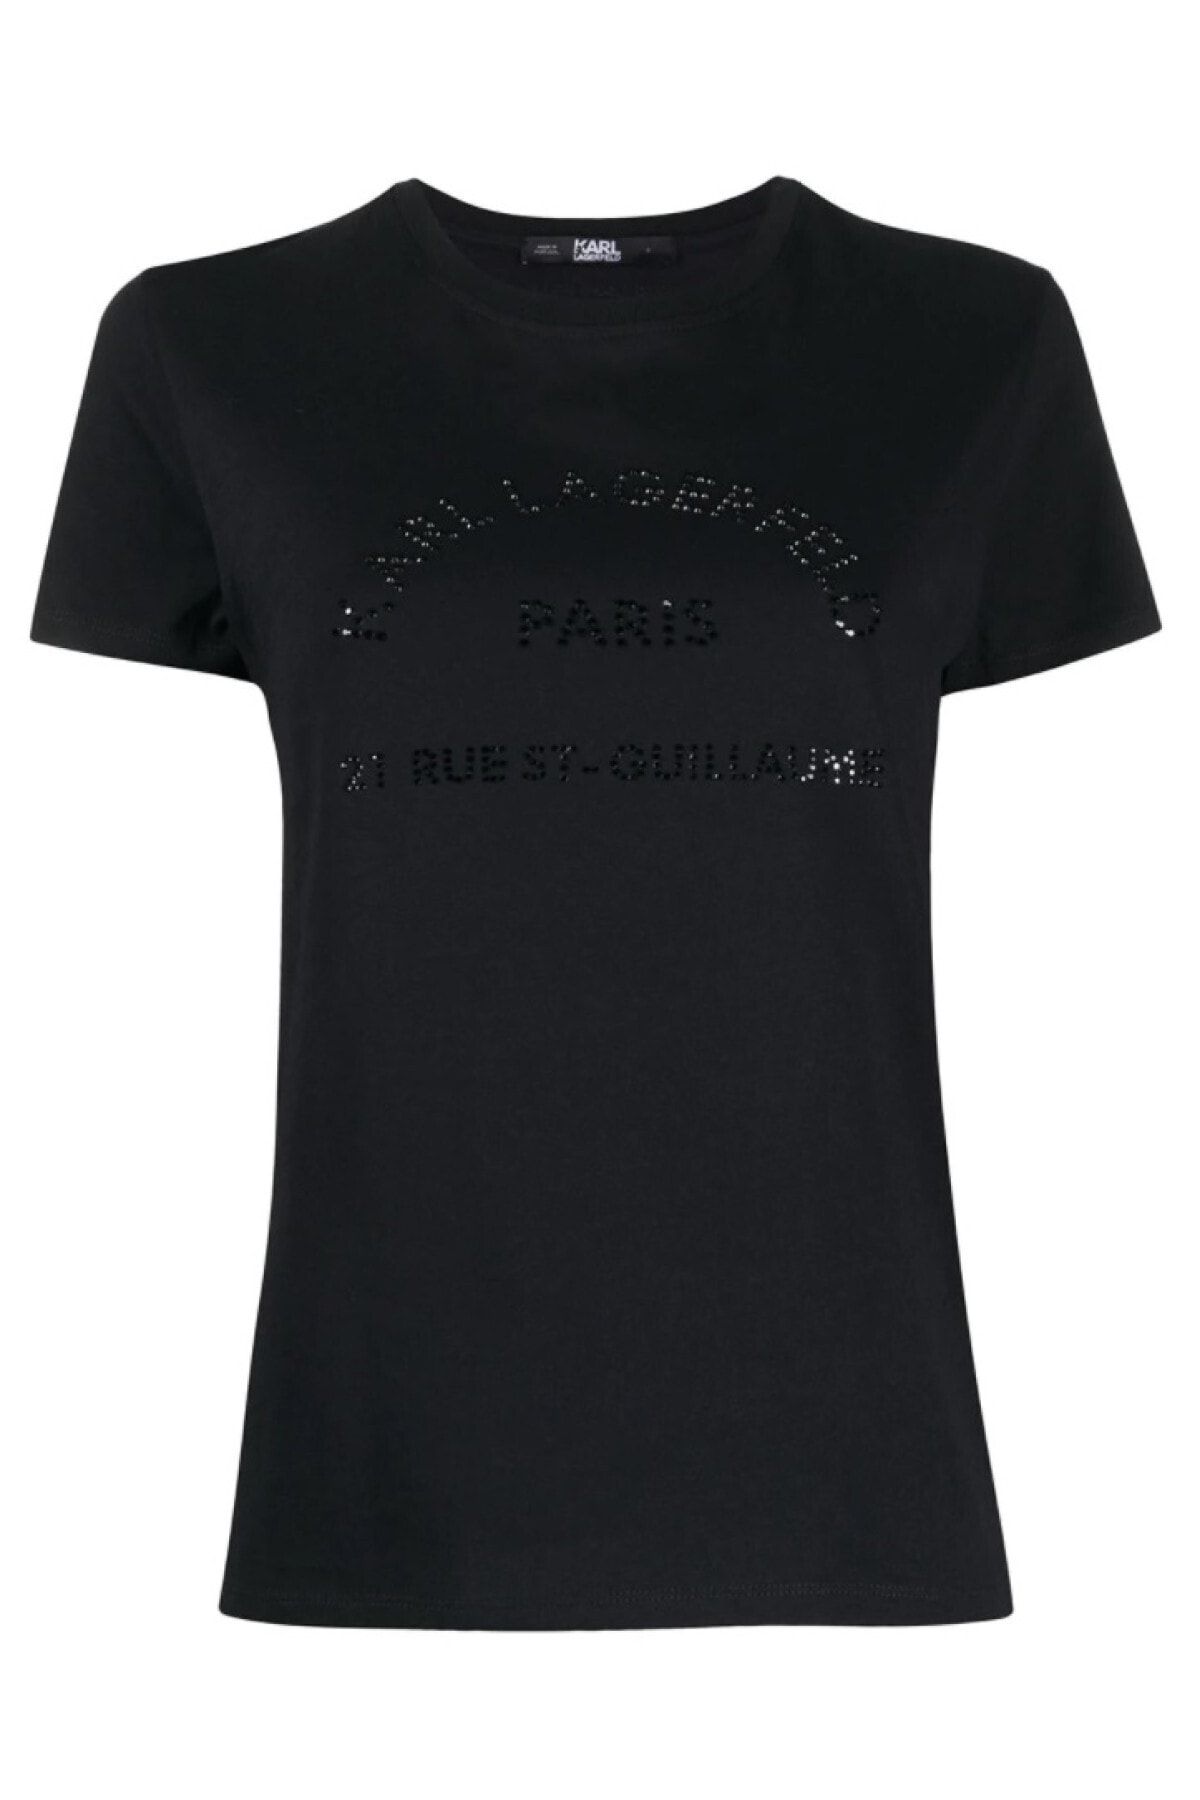 Karl Lagerfeld Logo Adres Taşlı T-shirt